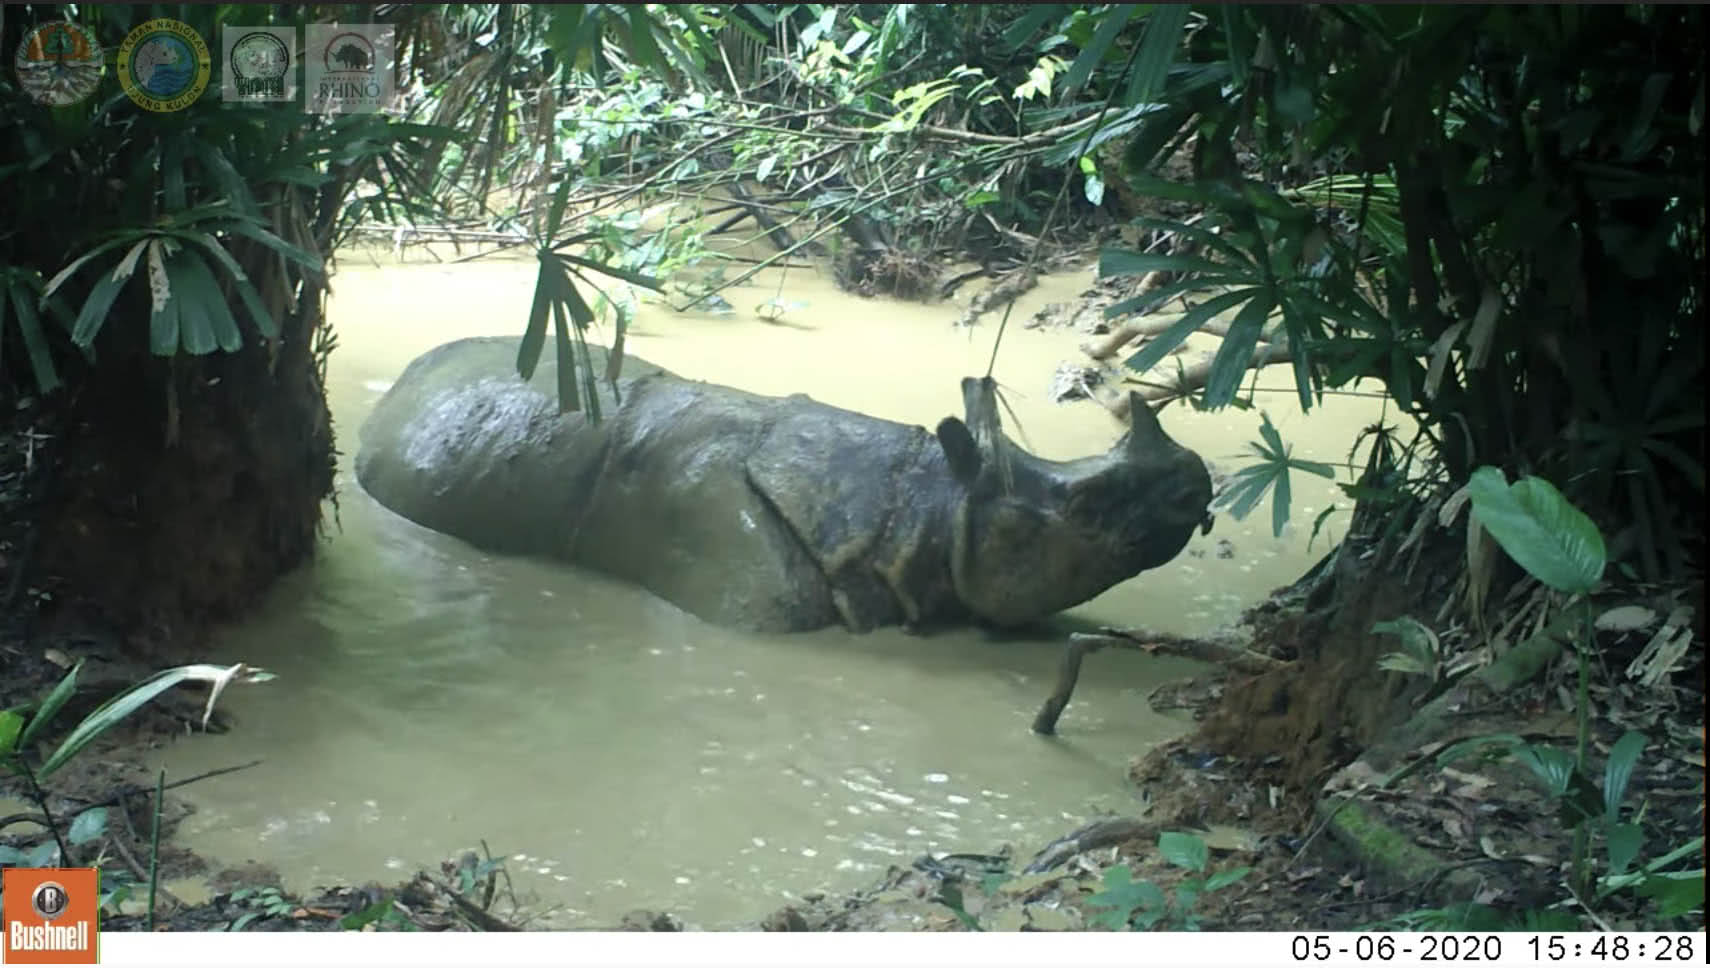 Rinoceronte de Java se despojando na lama